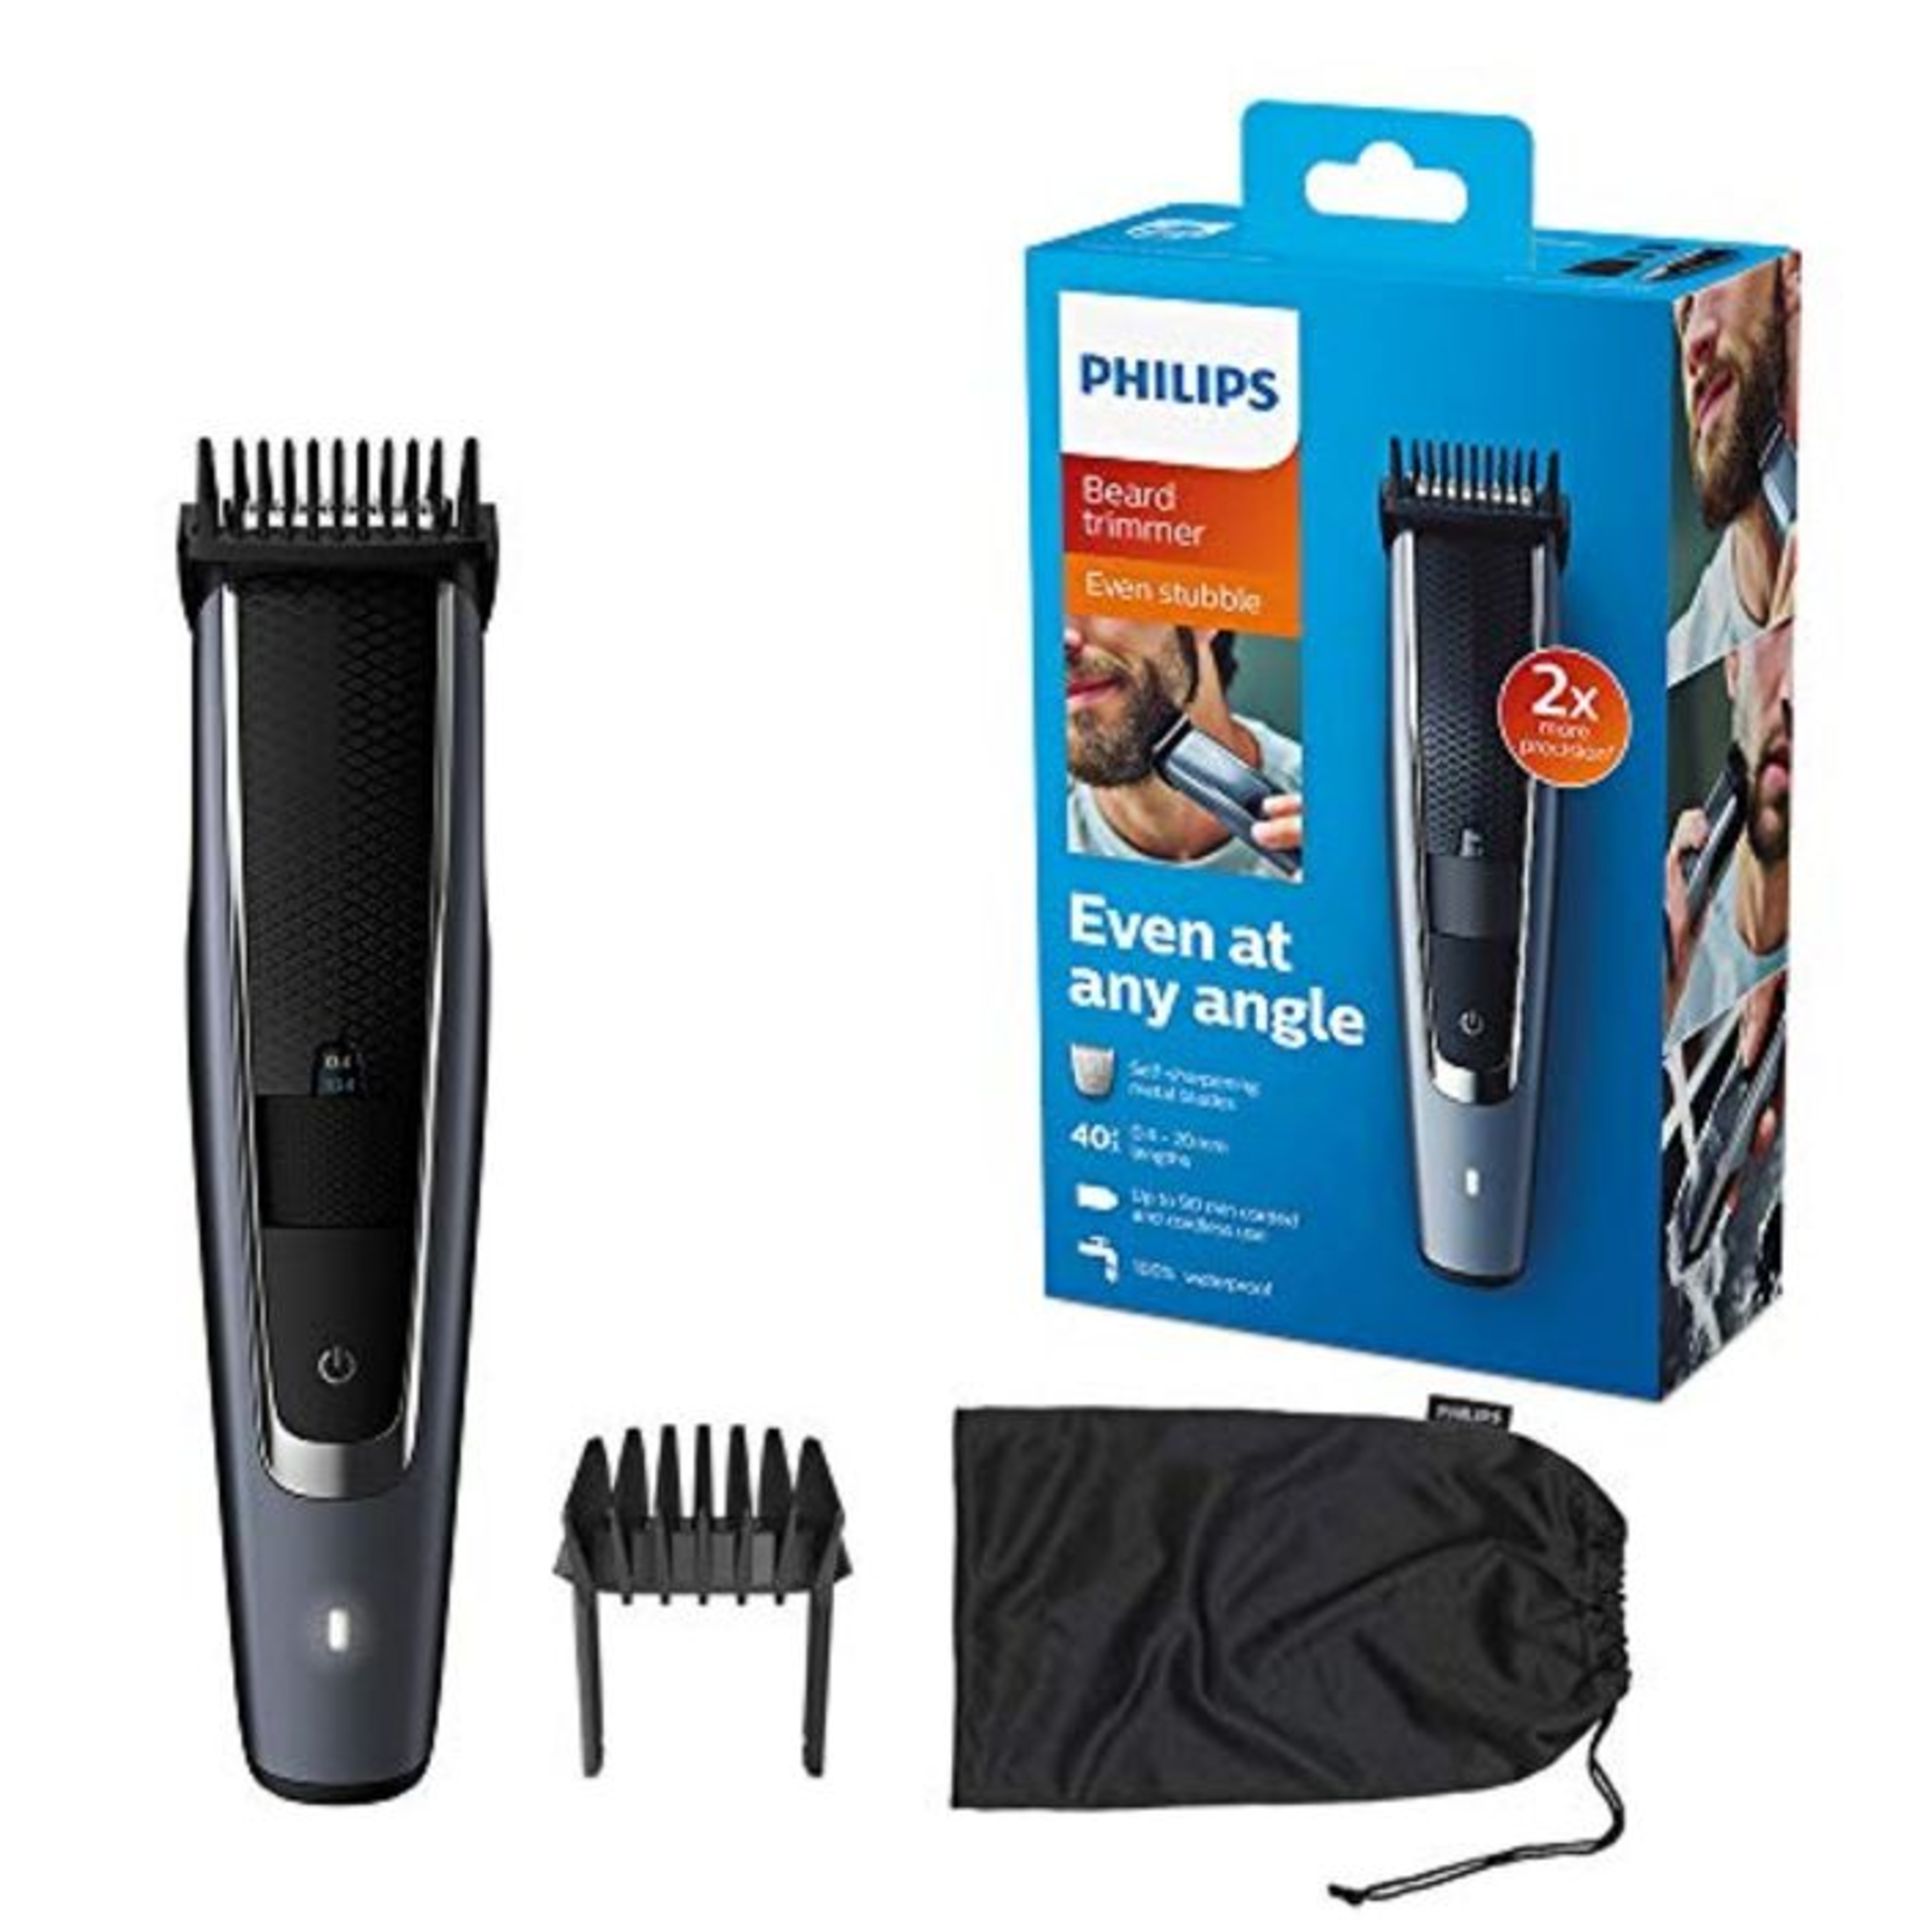 Philips Beard and Stubble Trimmer/Hair Clipper for Men, Series 5000, 40 Length Setting